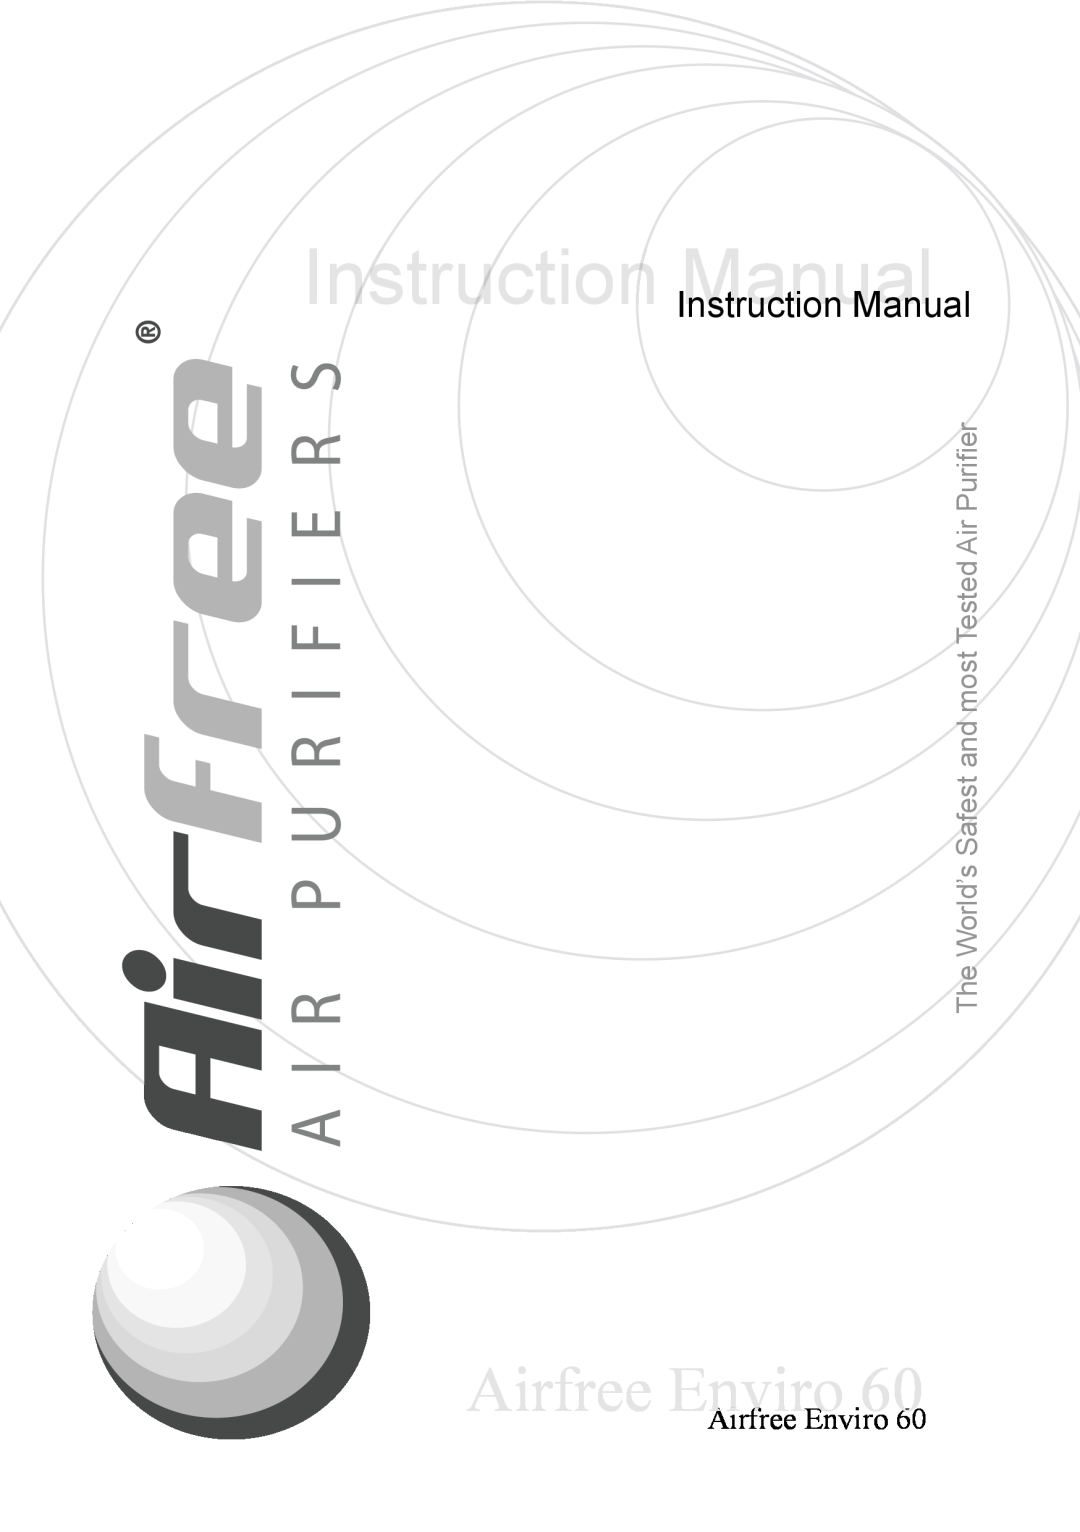 Airfree Enviro 60 instruction manual Instruuctionn Manual, Airfree Enviro, The World’s Safest and most Tested Air Puriﬁer 